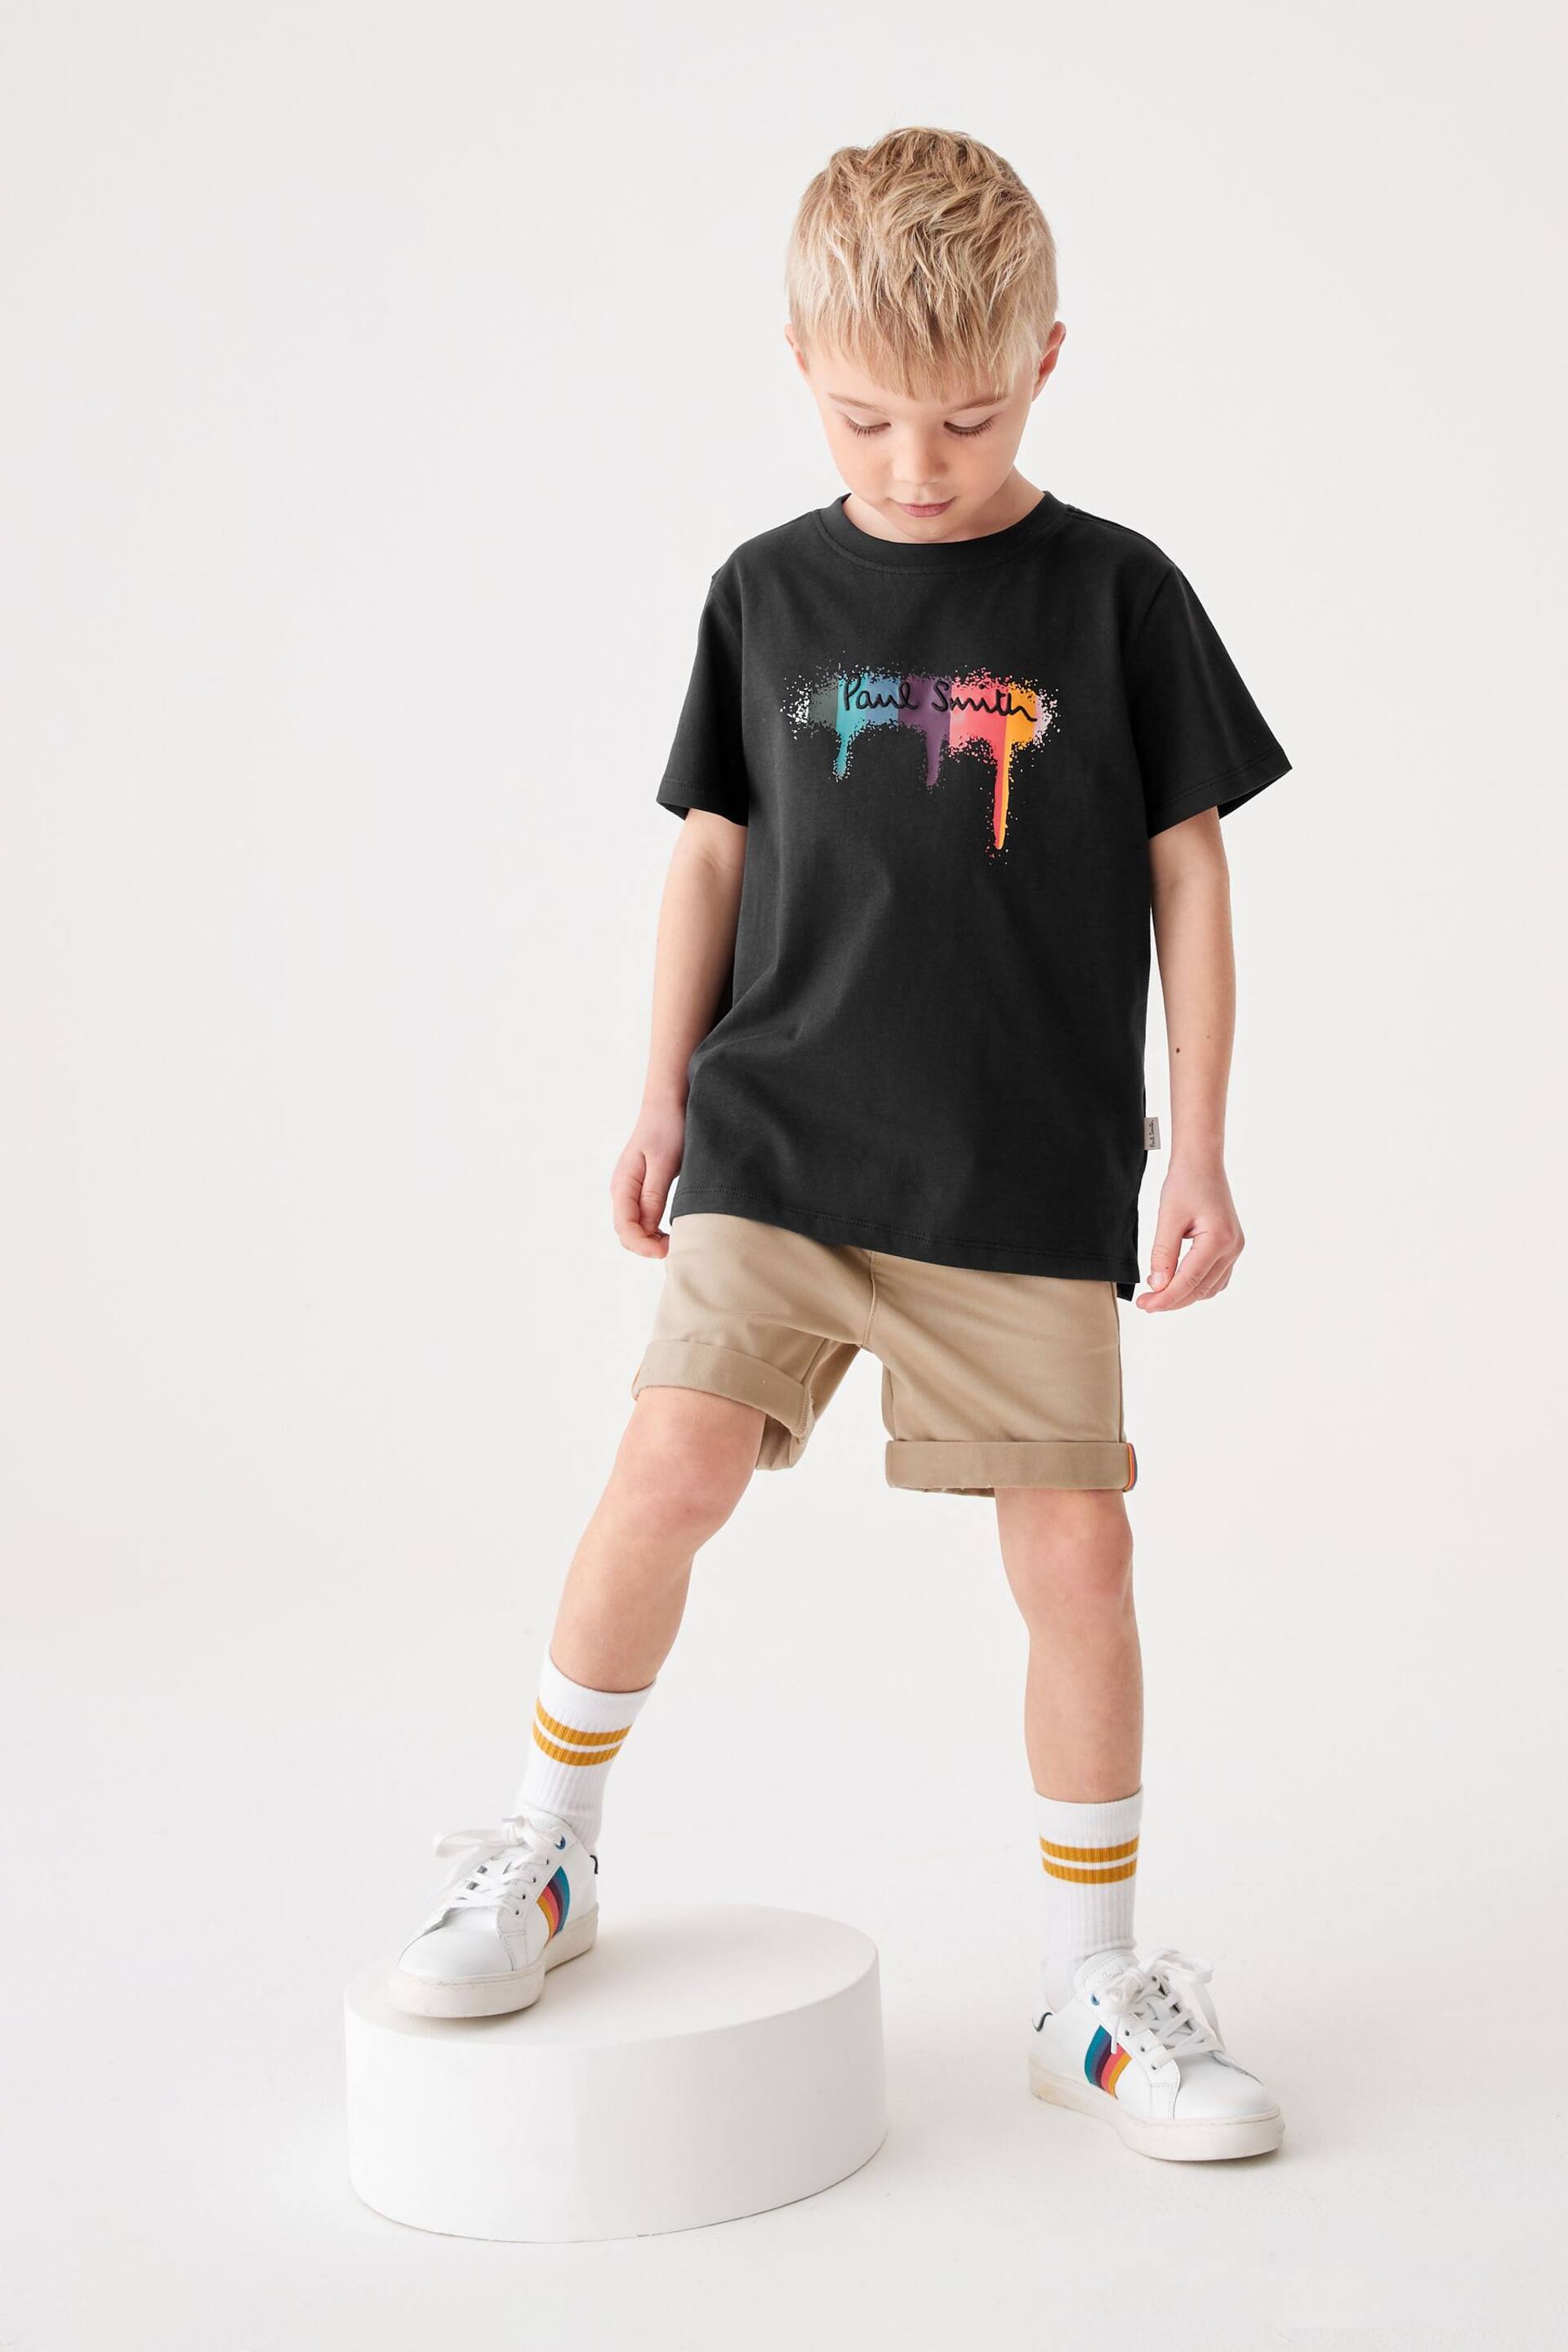 Paul Smith Junior Boys Short Sleeve Iconic Print T-Shirt - Image 3 of 4